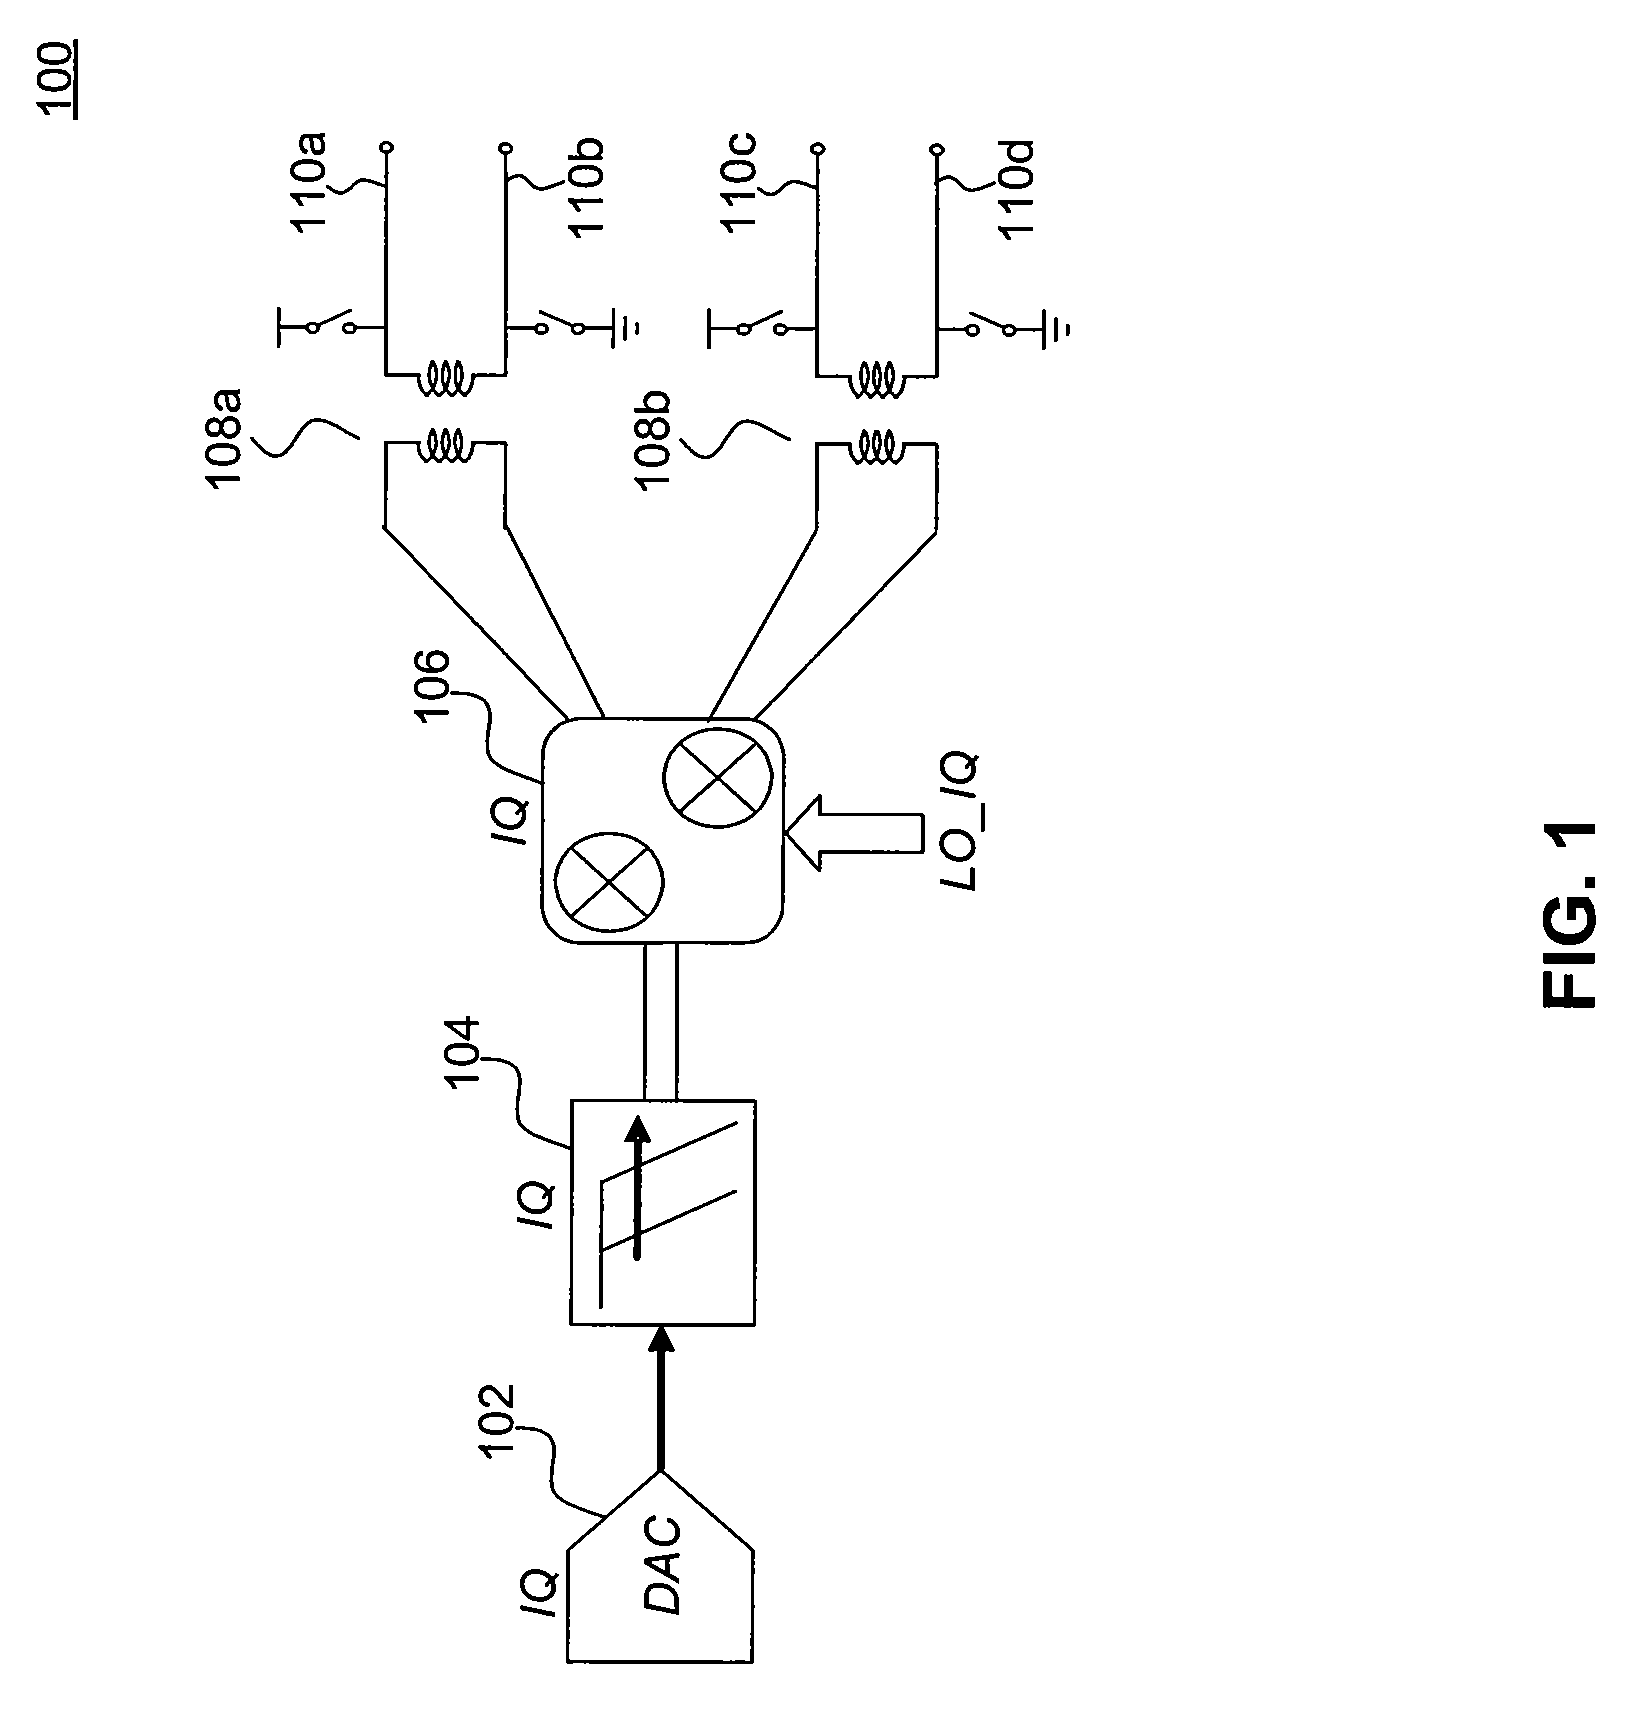 Current-input current-output reconfigurable passive reconstruction filter